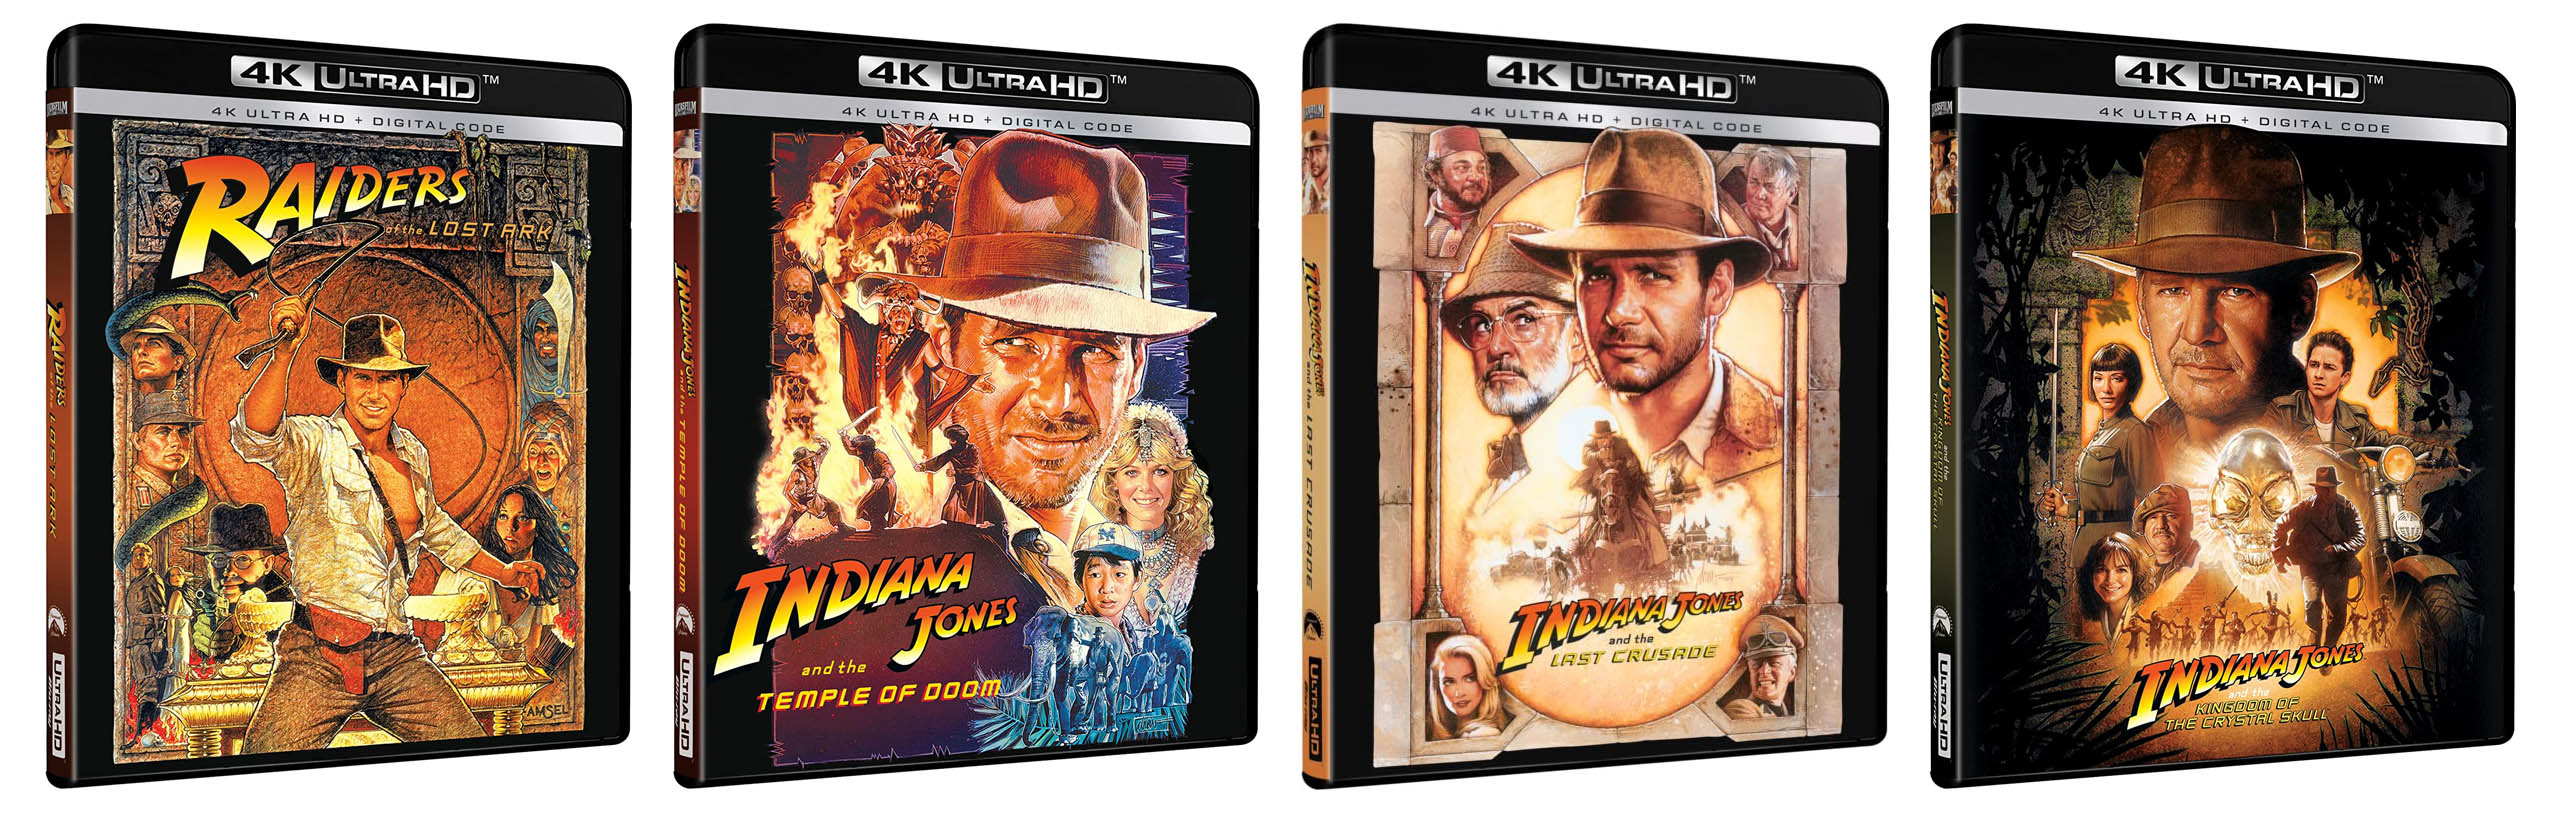 Indiana Jones 4k Blu-ray standard editions